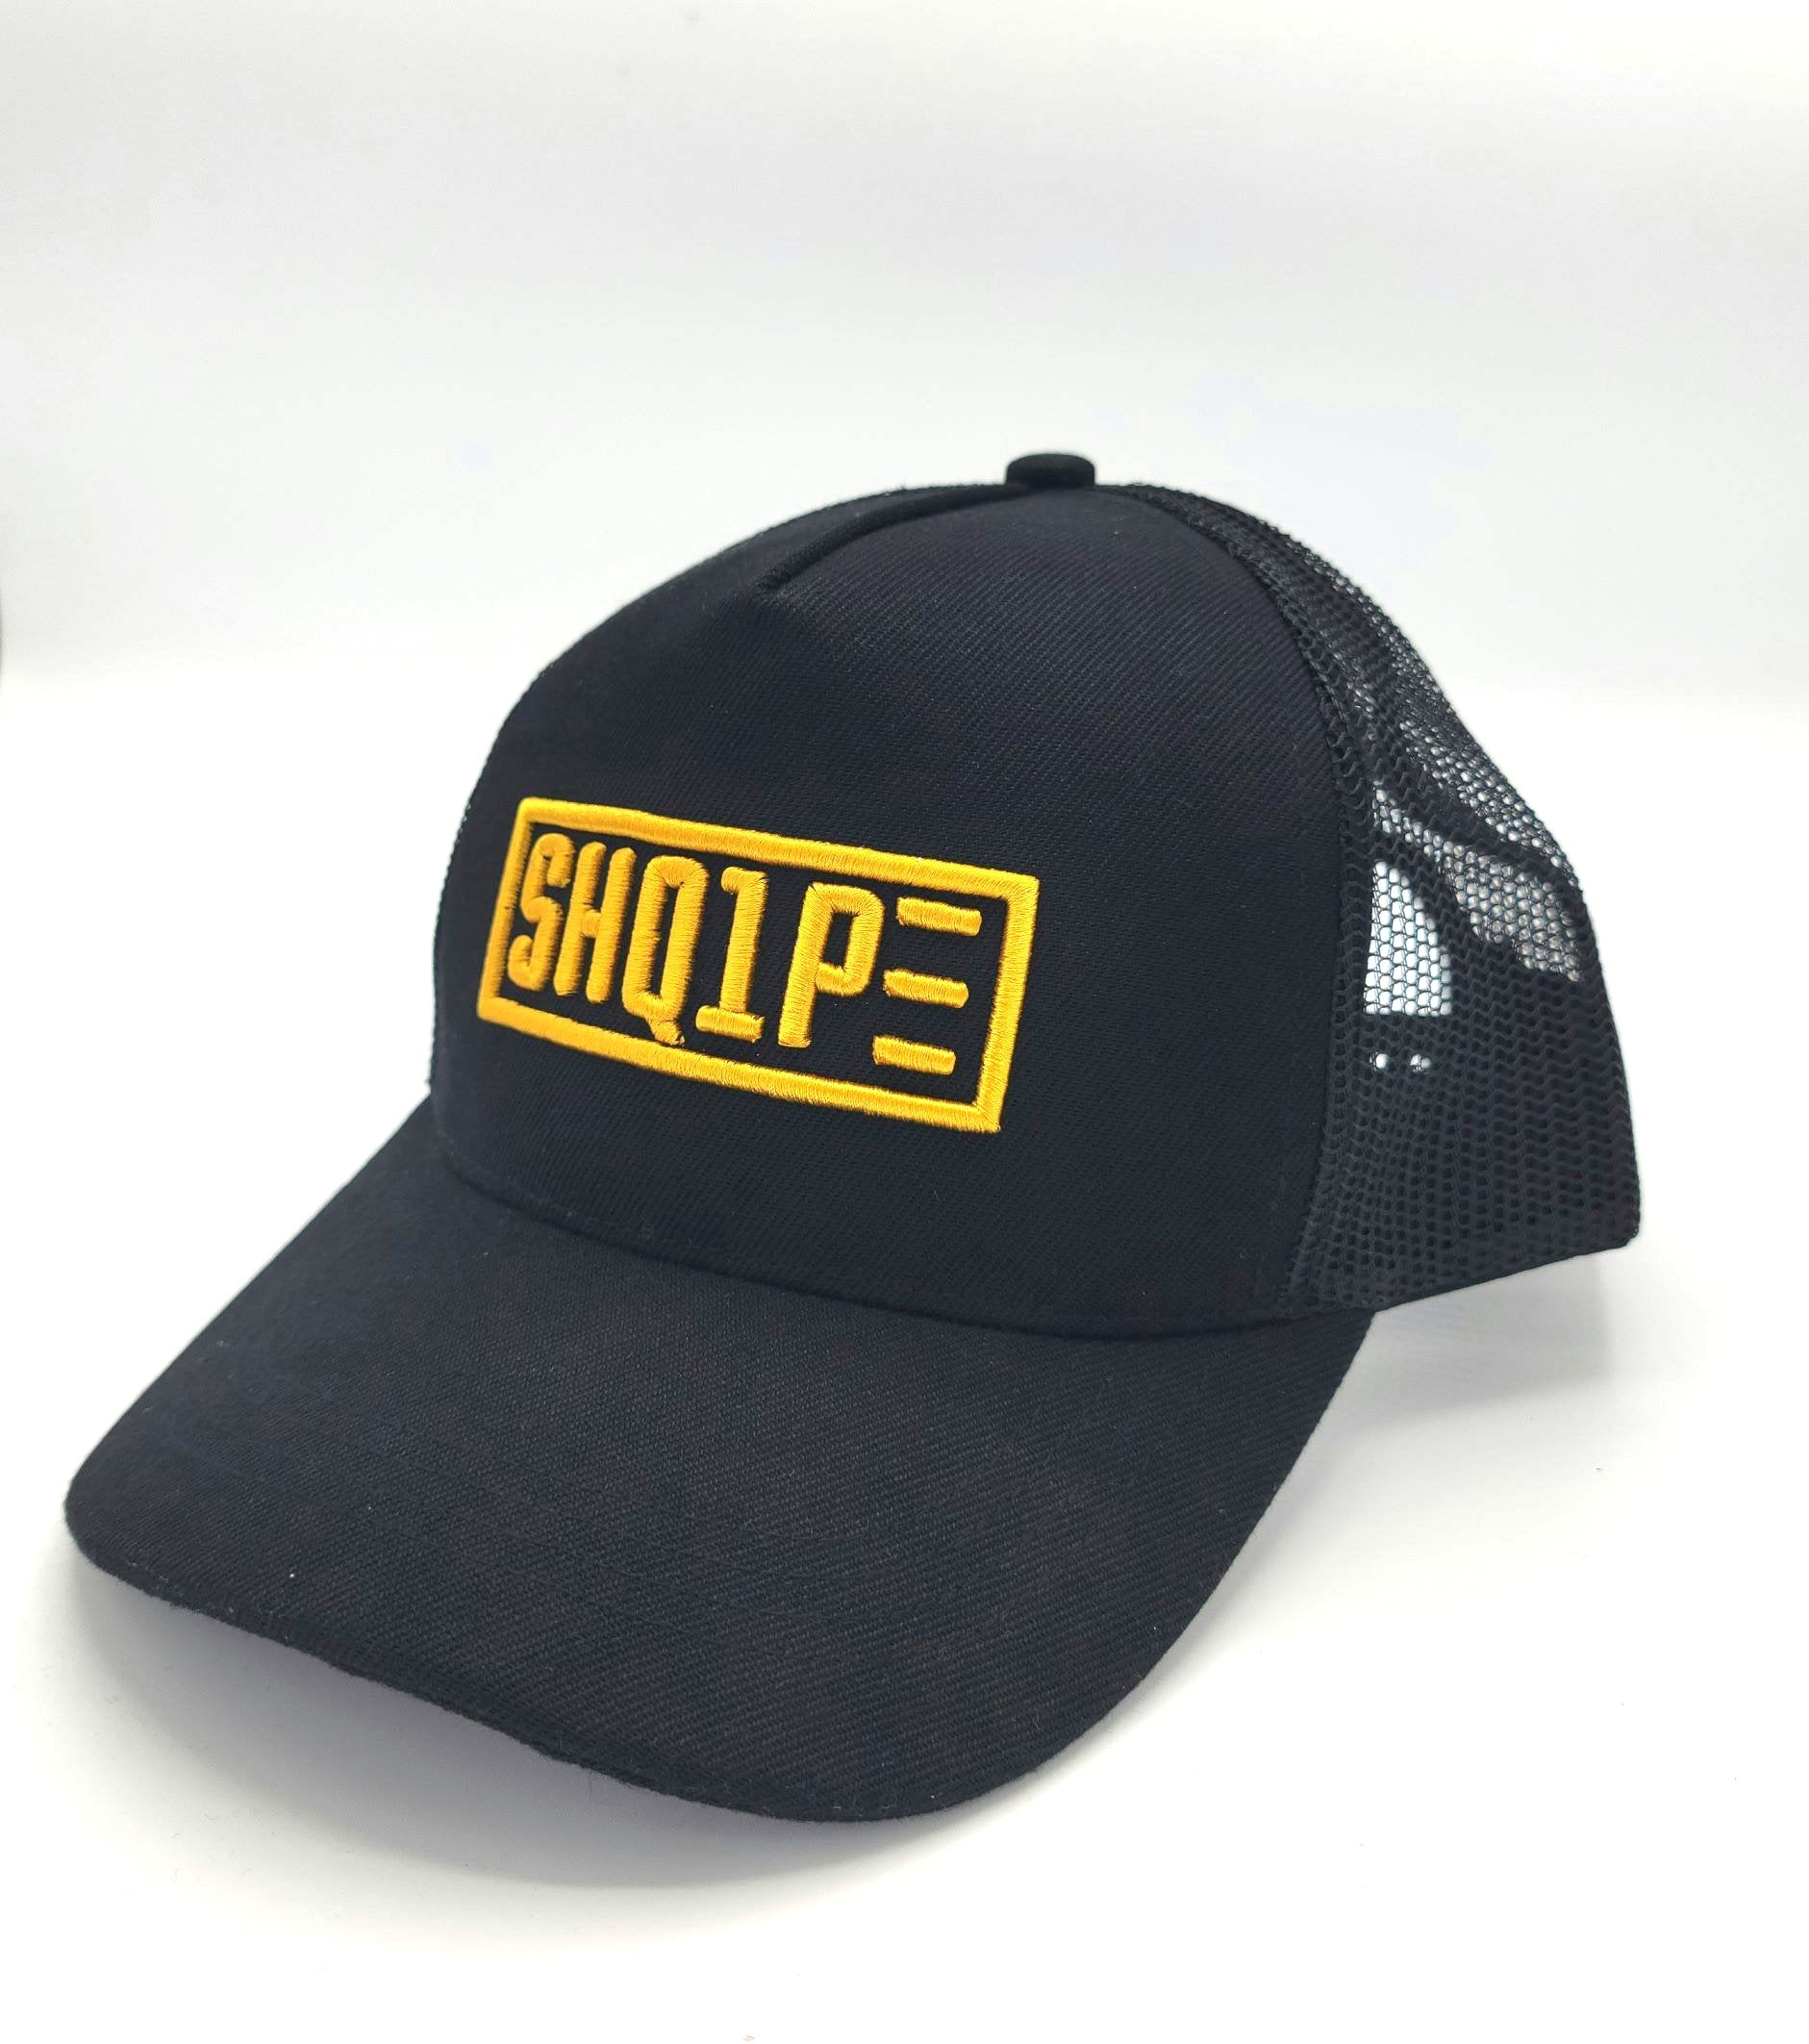 Trucker Hat (Black/Gold)